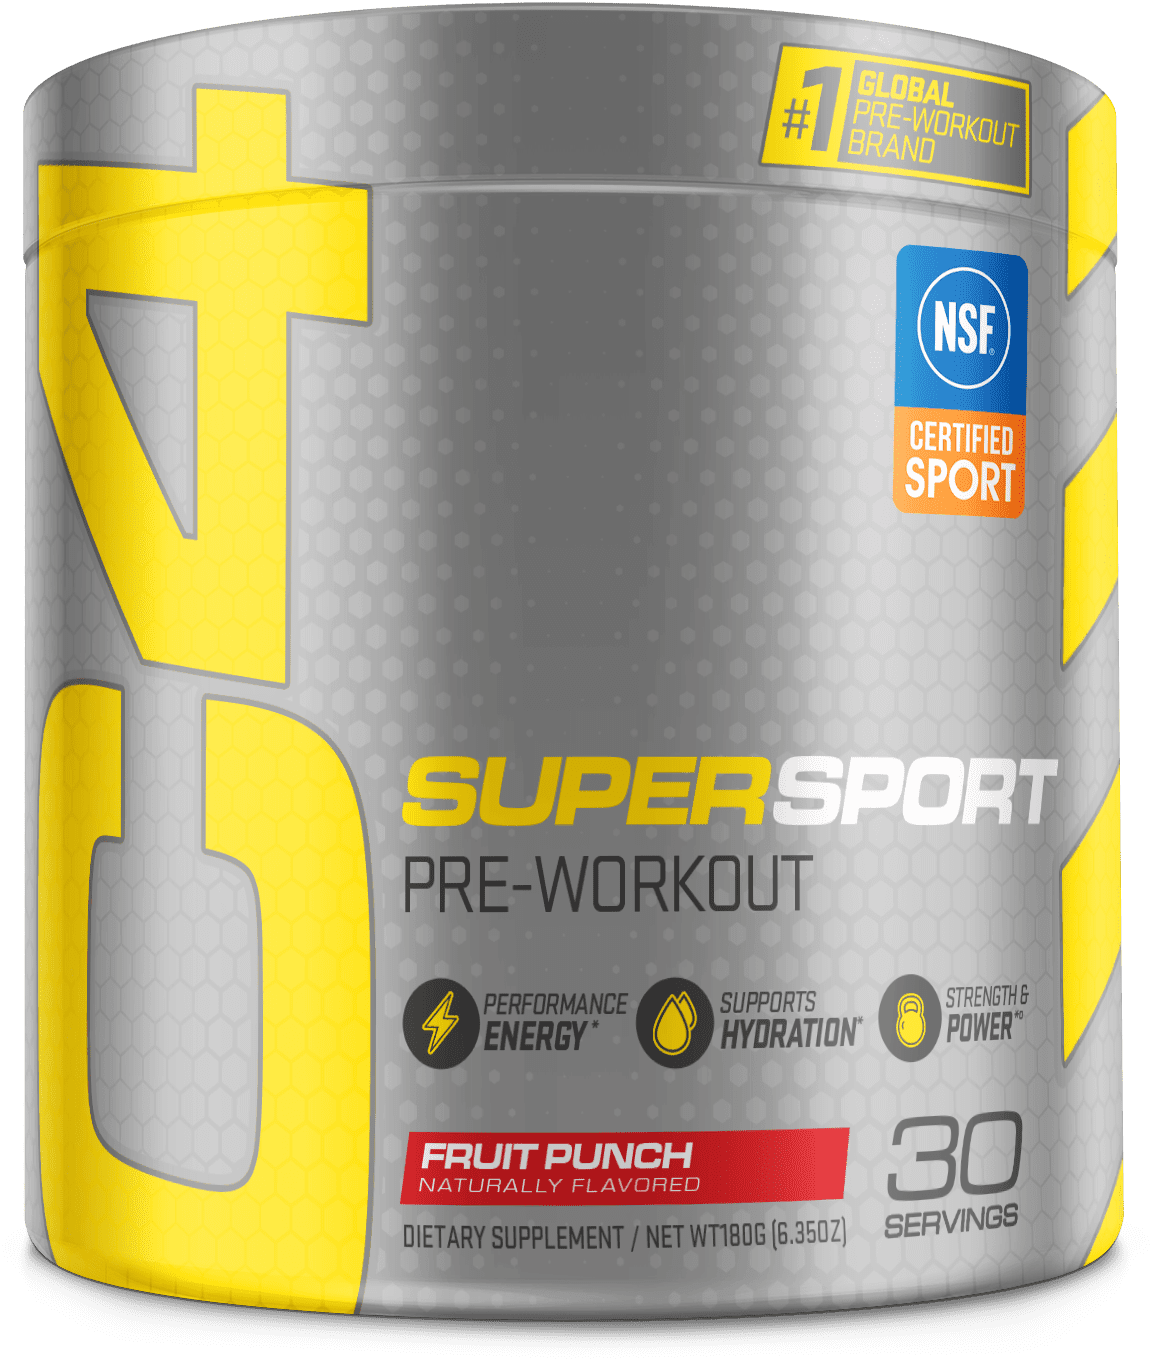 Cellucor C4 Super Sport Preworkout, Fruit Punch, Energy, Strength & Power, 30 Servings